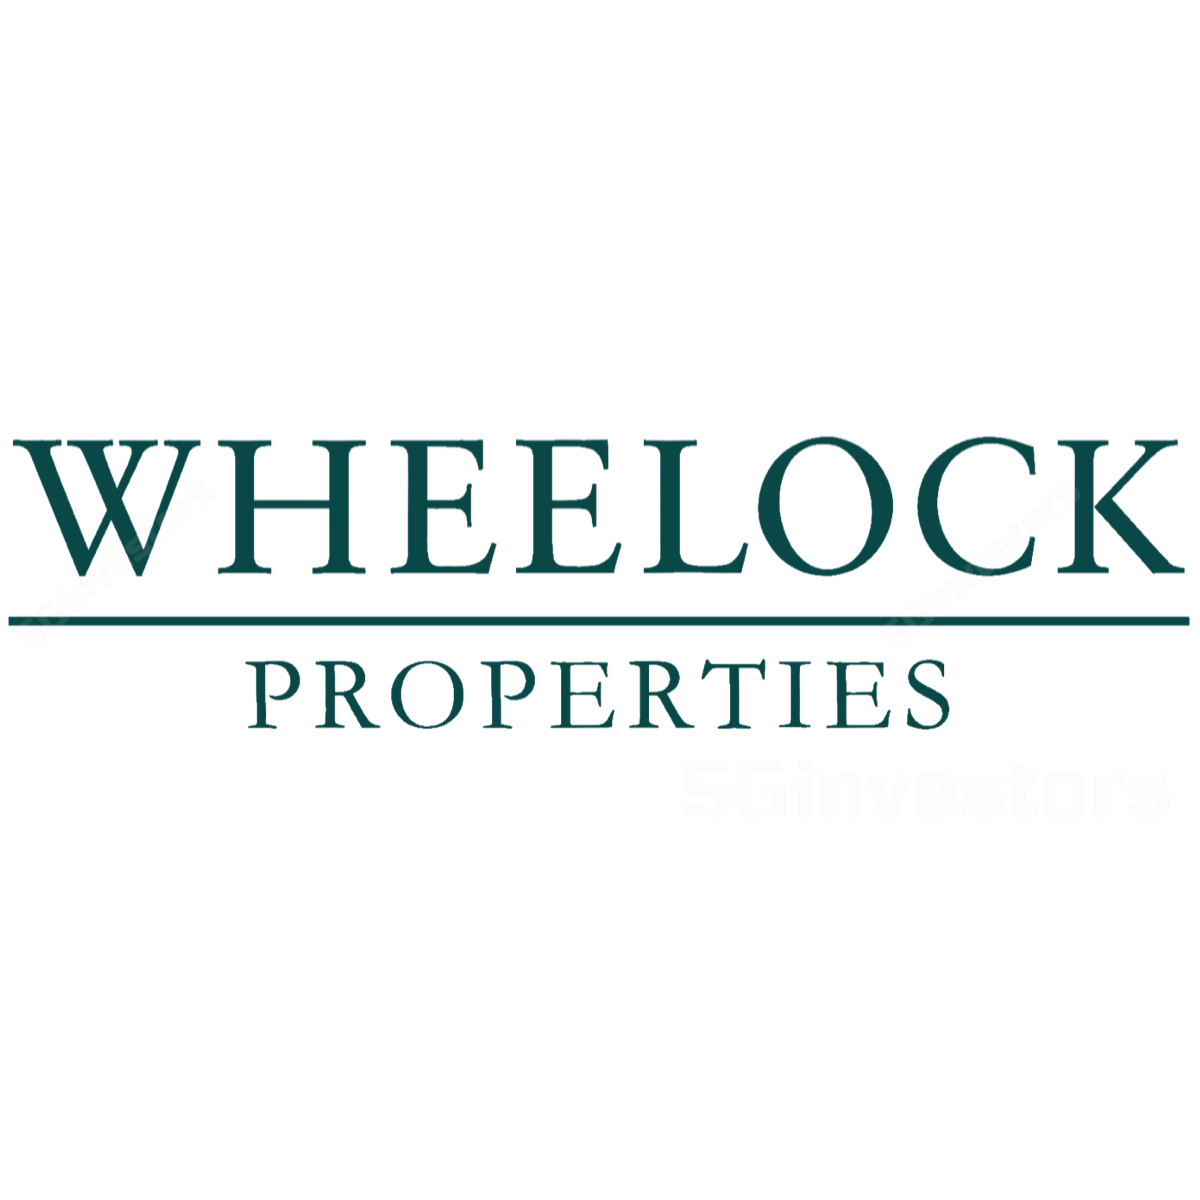 Wheelock Properties Singapore - Phillip Securities 2017-06-02: Prime Privatisation Candidate